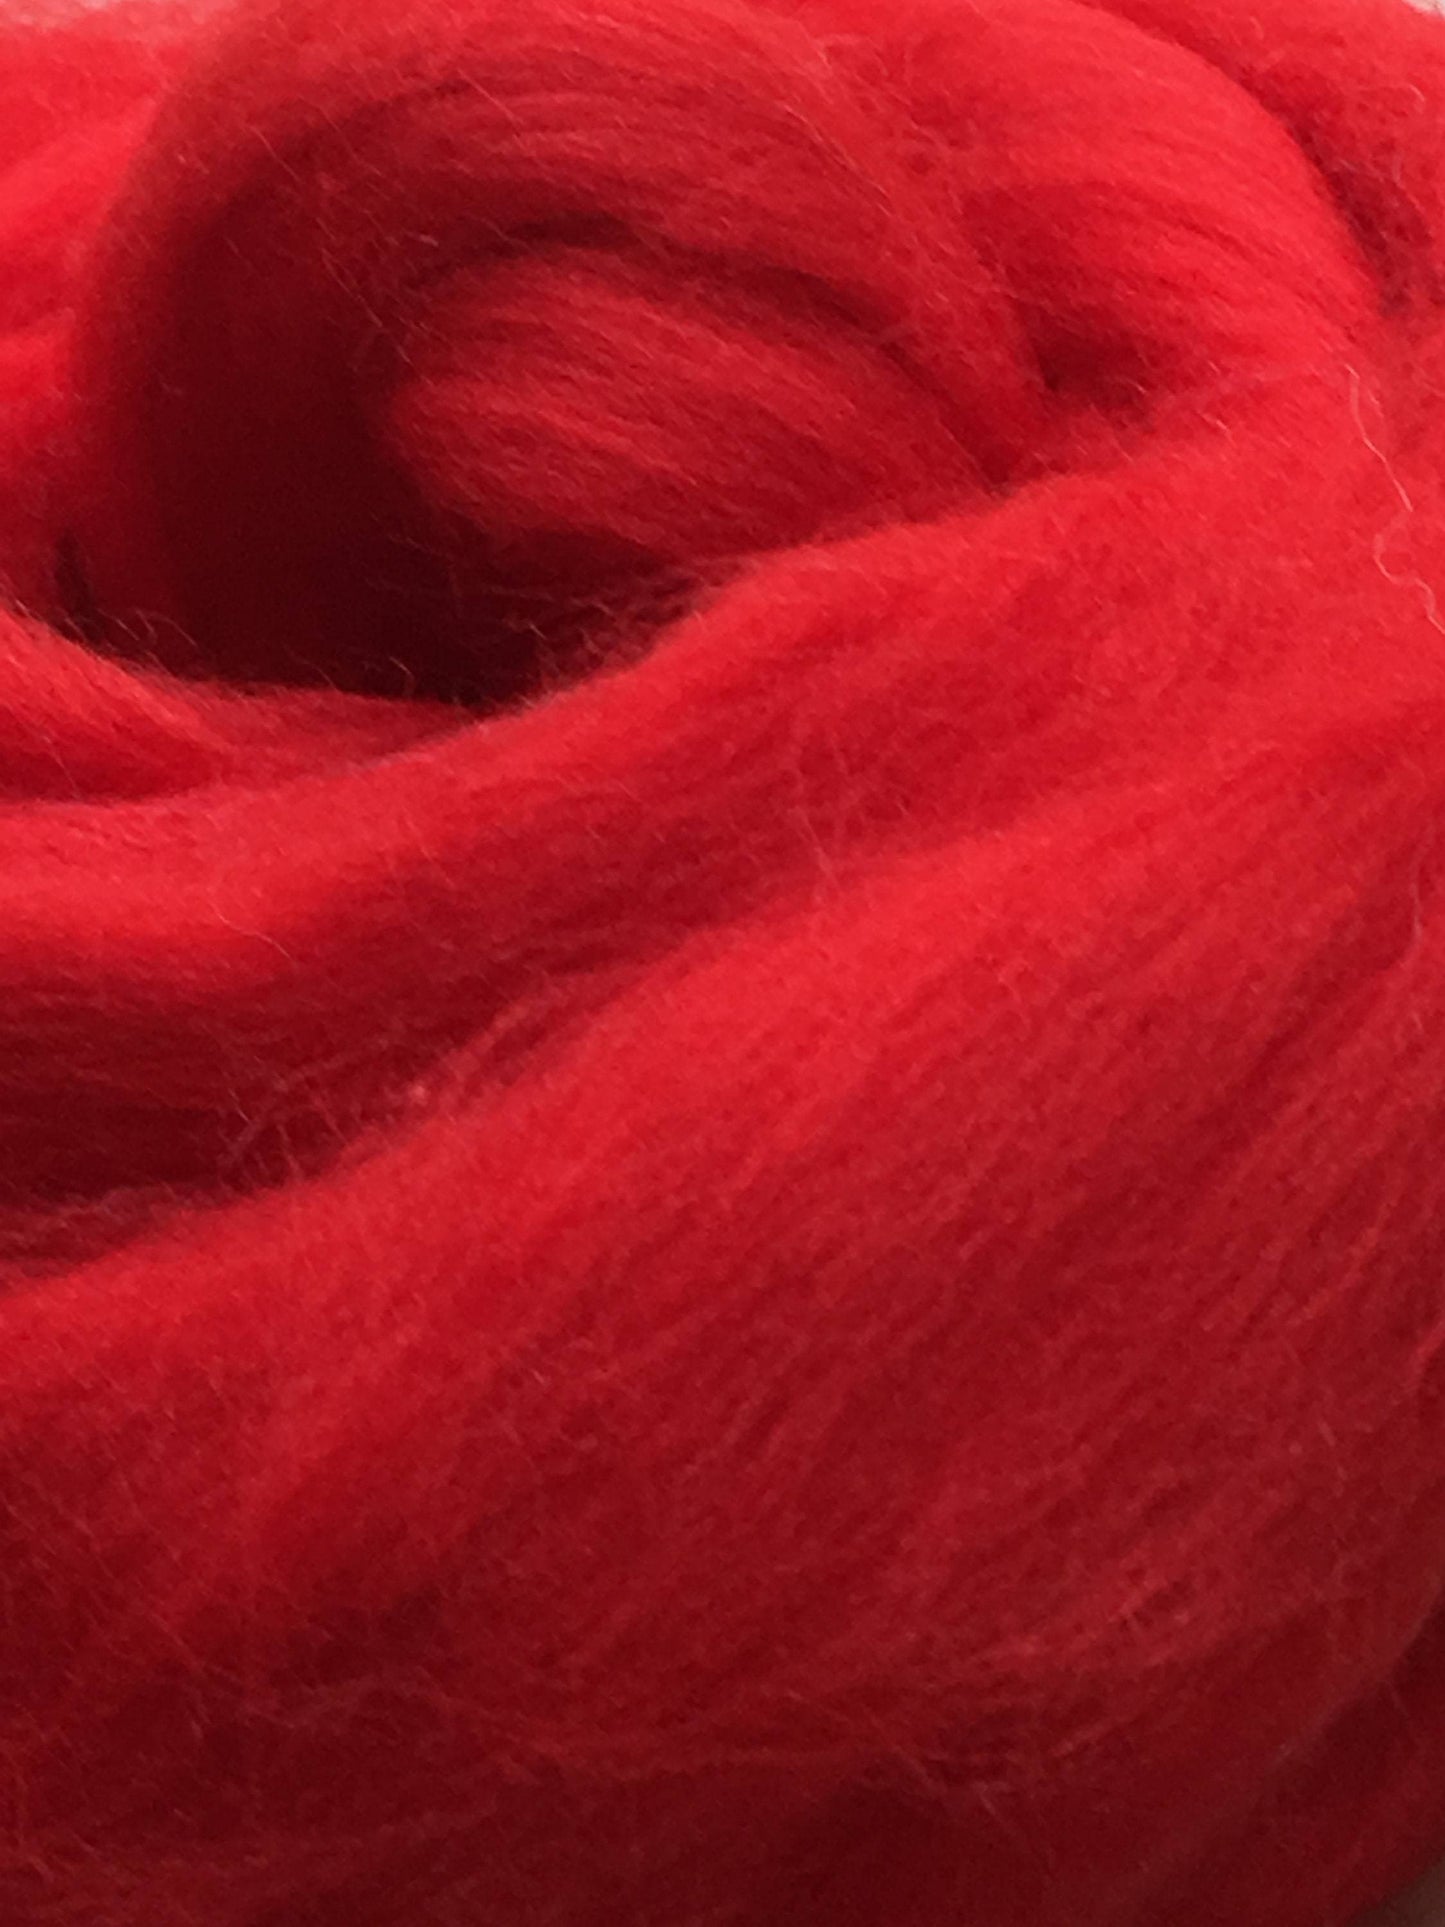 Red Merino Wool Top Roving